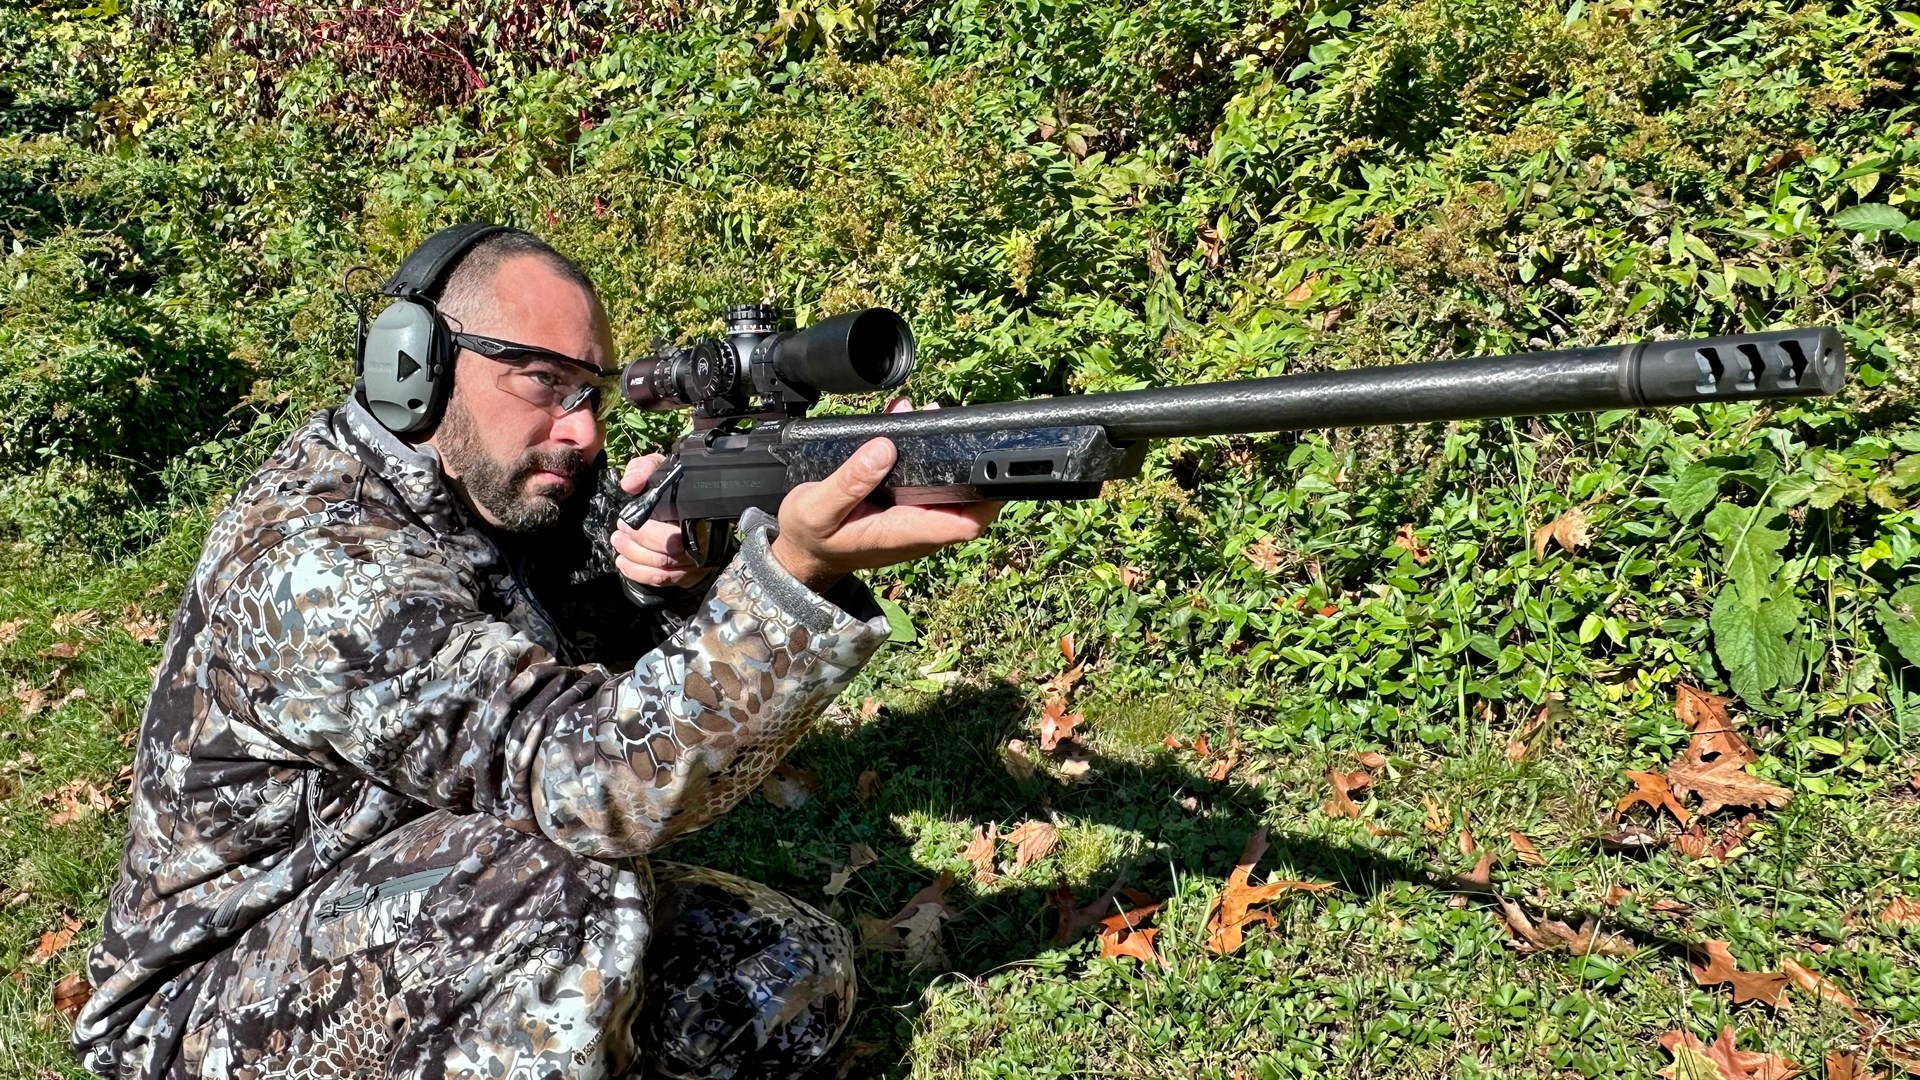 Man kneeling wearing camouflage outdoors bushes background bolt-action christensen arms modern hunting rifle carbon fiber